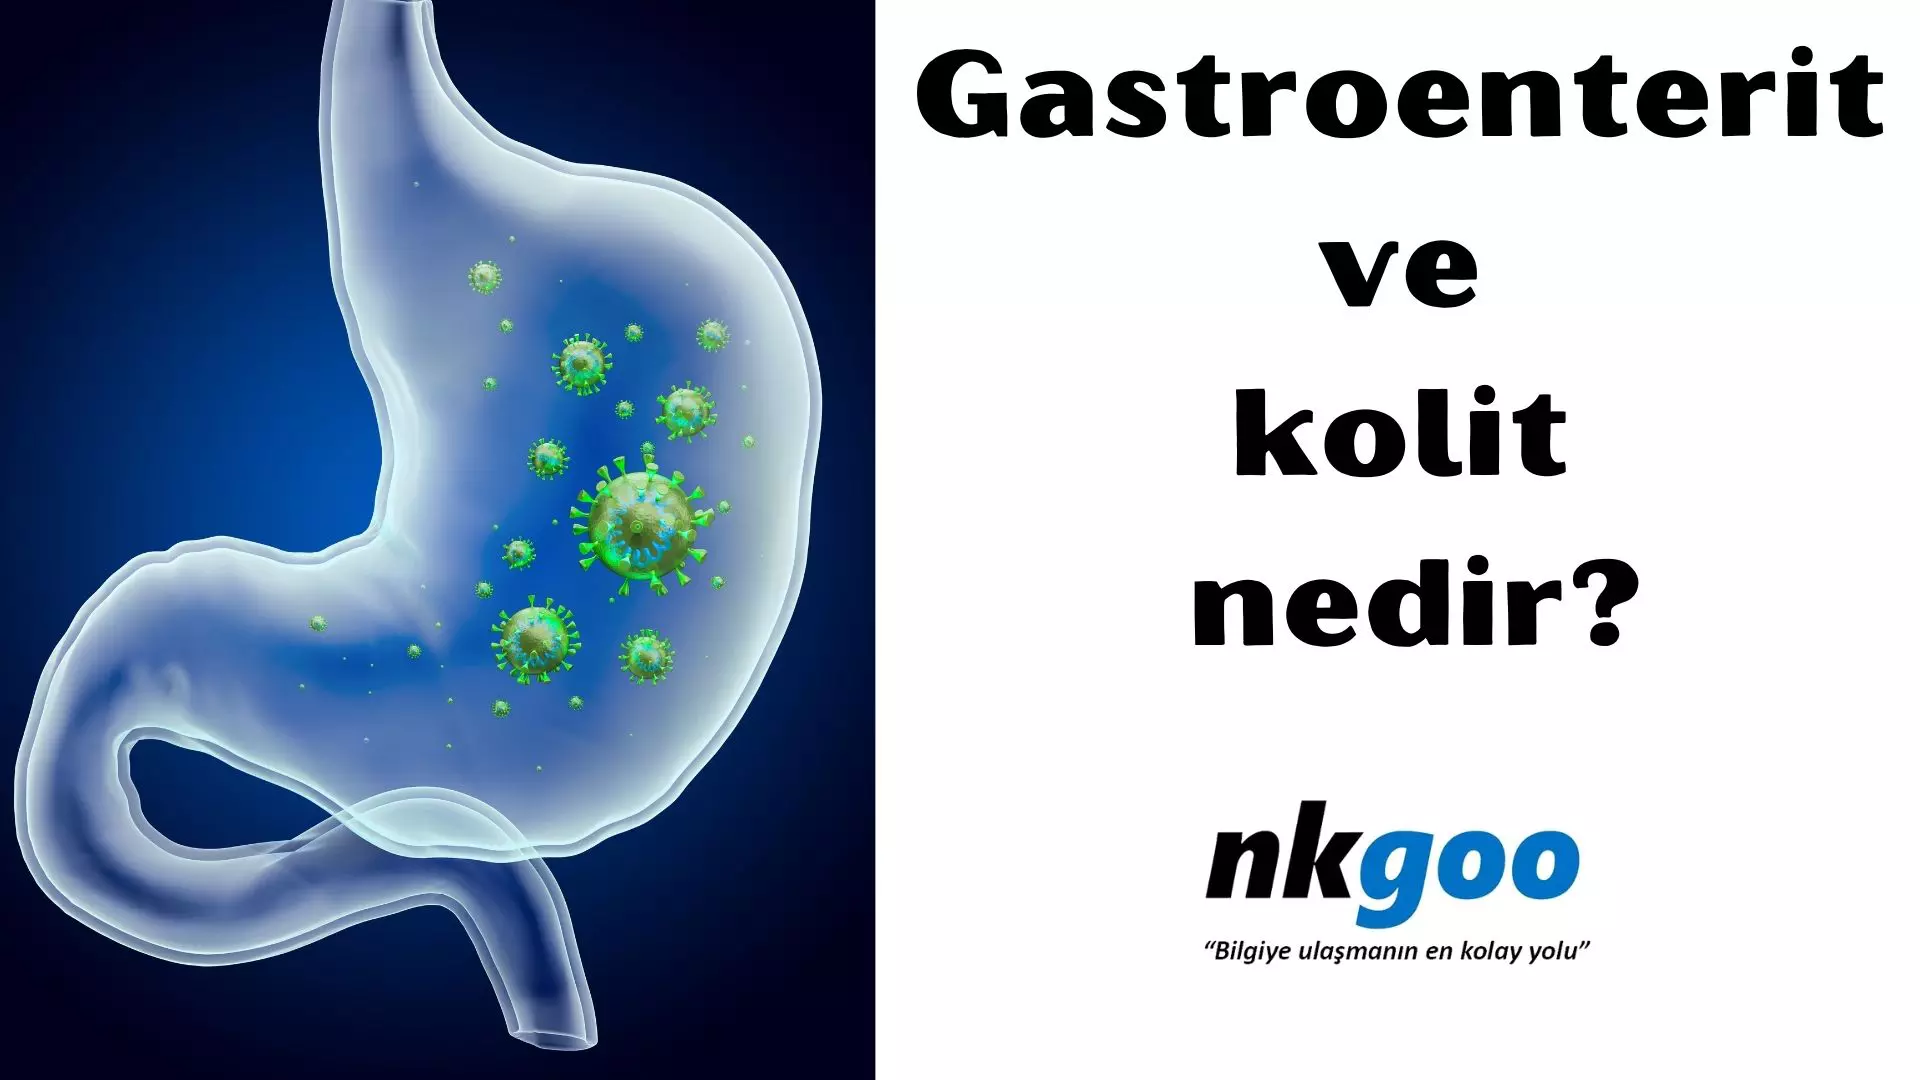 Gastroenterit ve kolit nedir? Belirtisi, nedeni